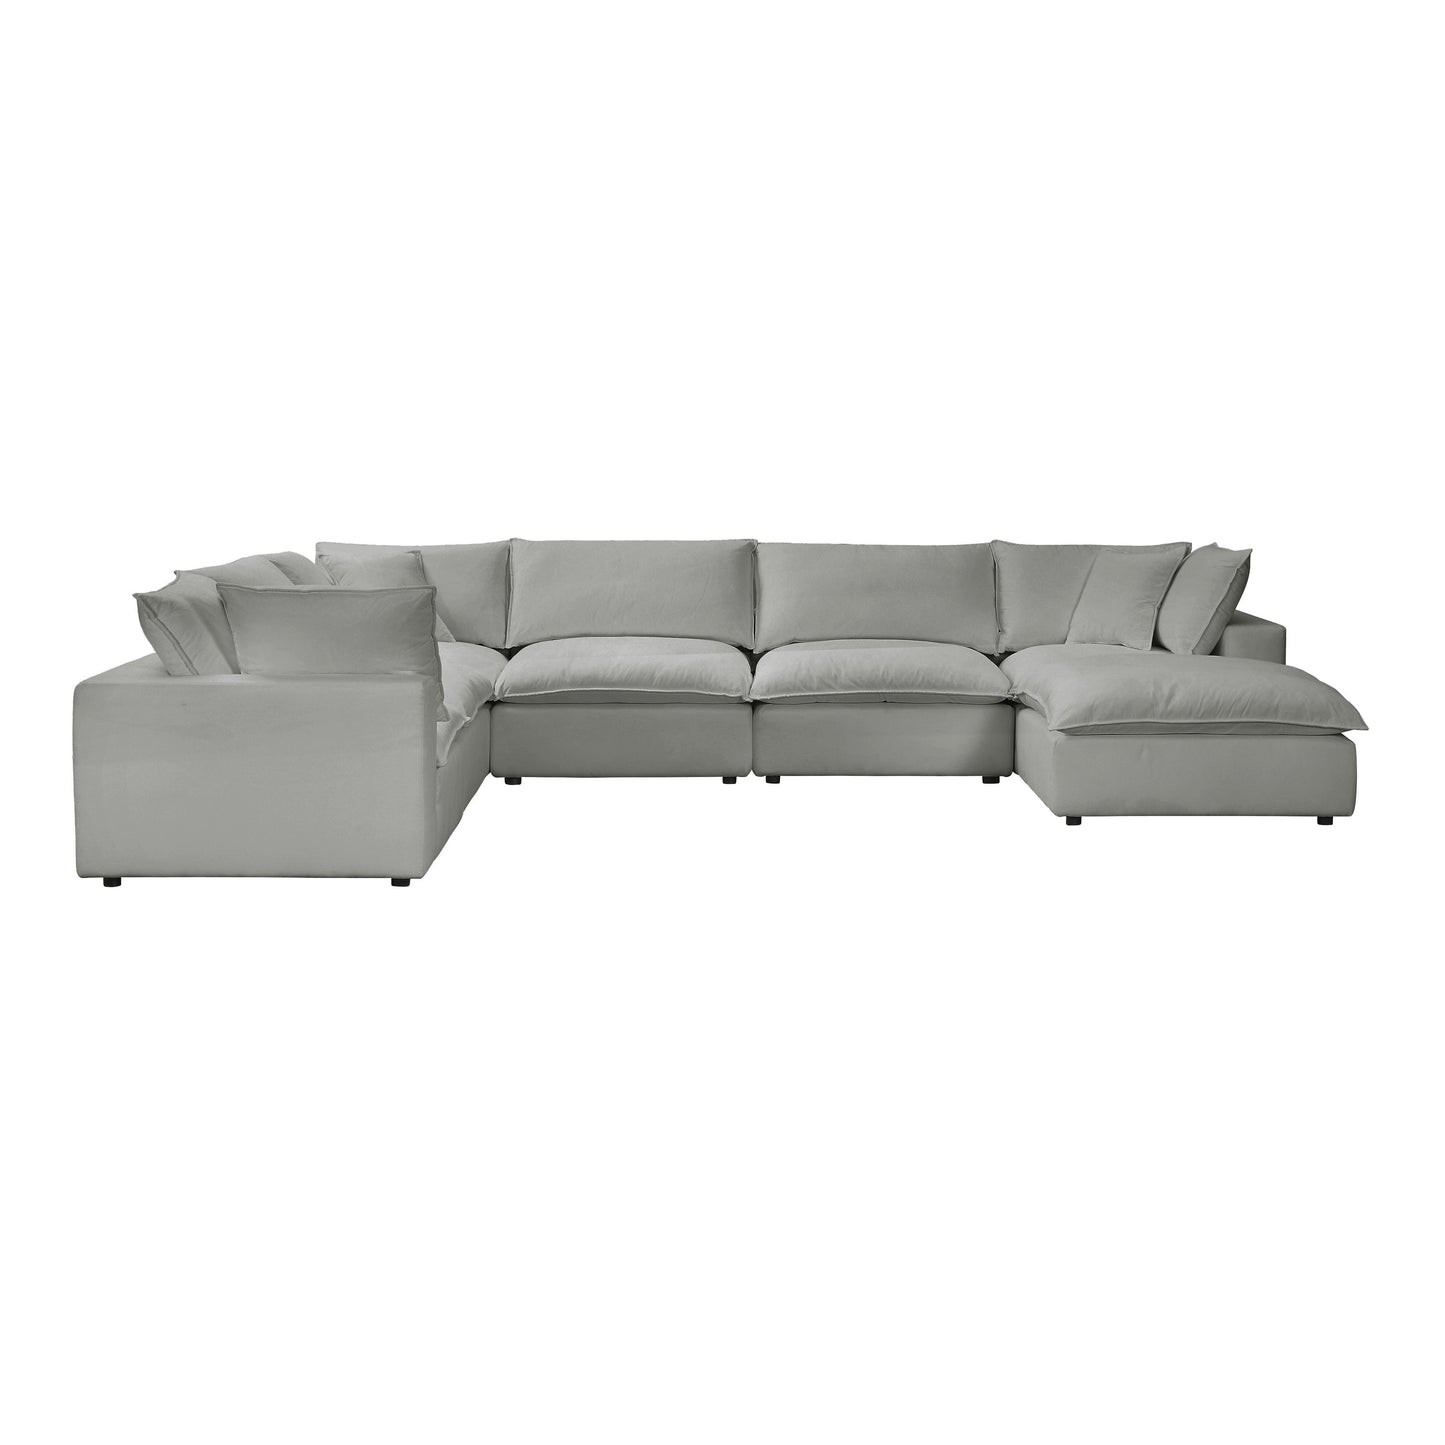 Tov Furniture Cali Slate Modular Large Chaise Sectional